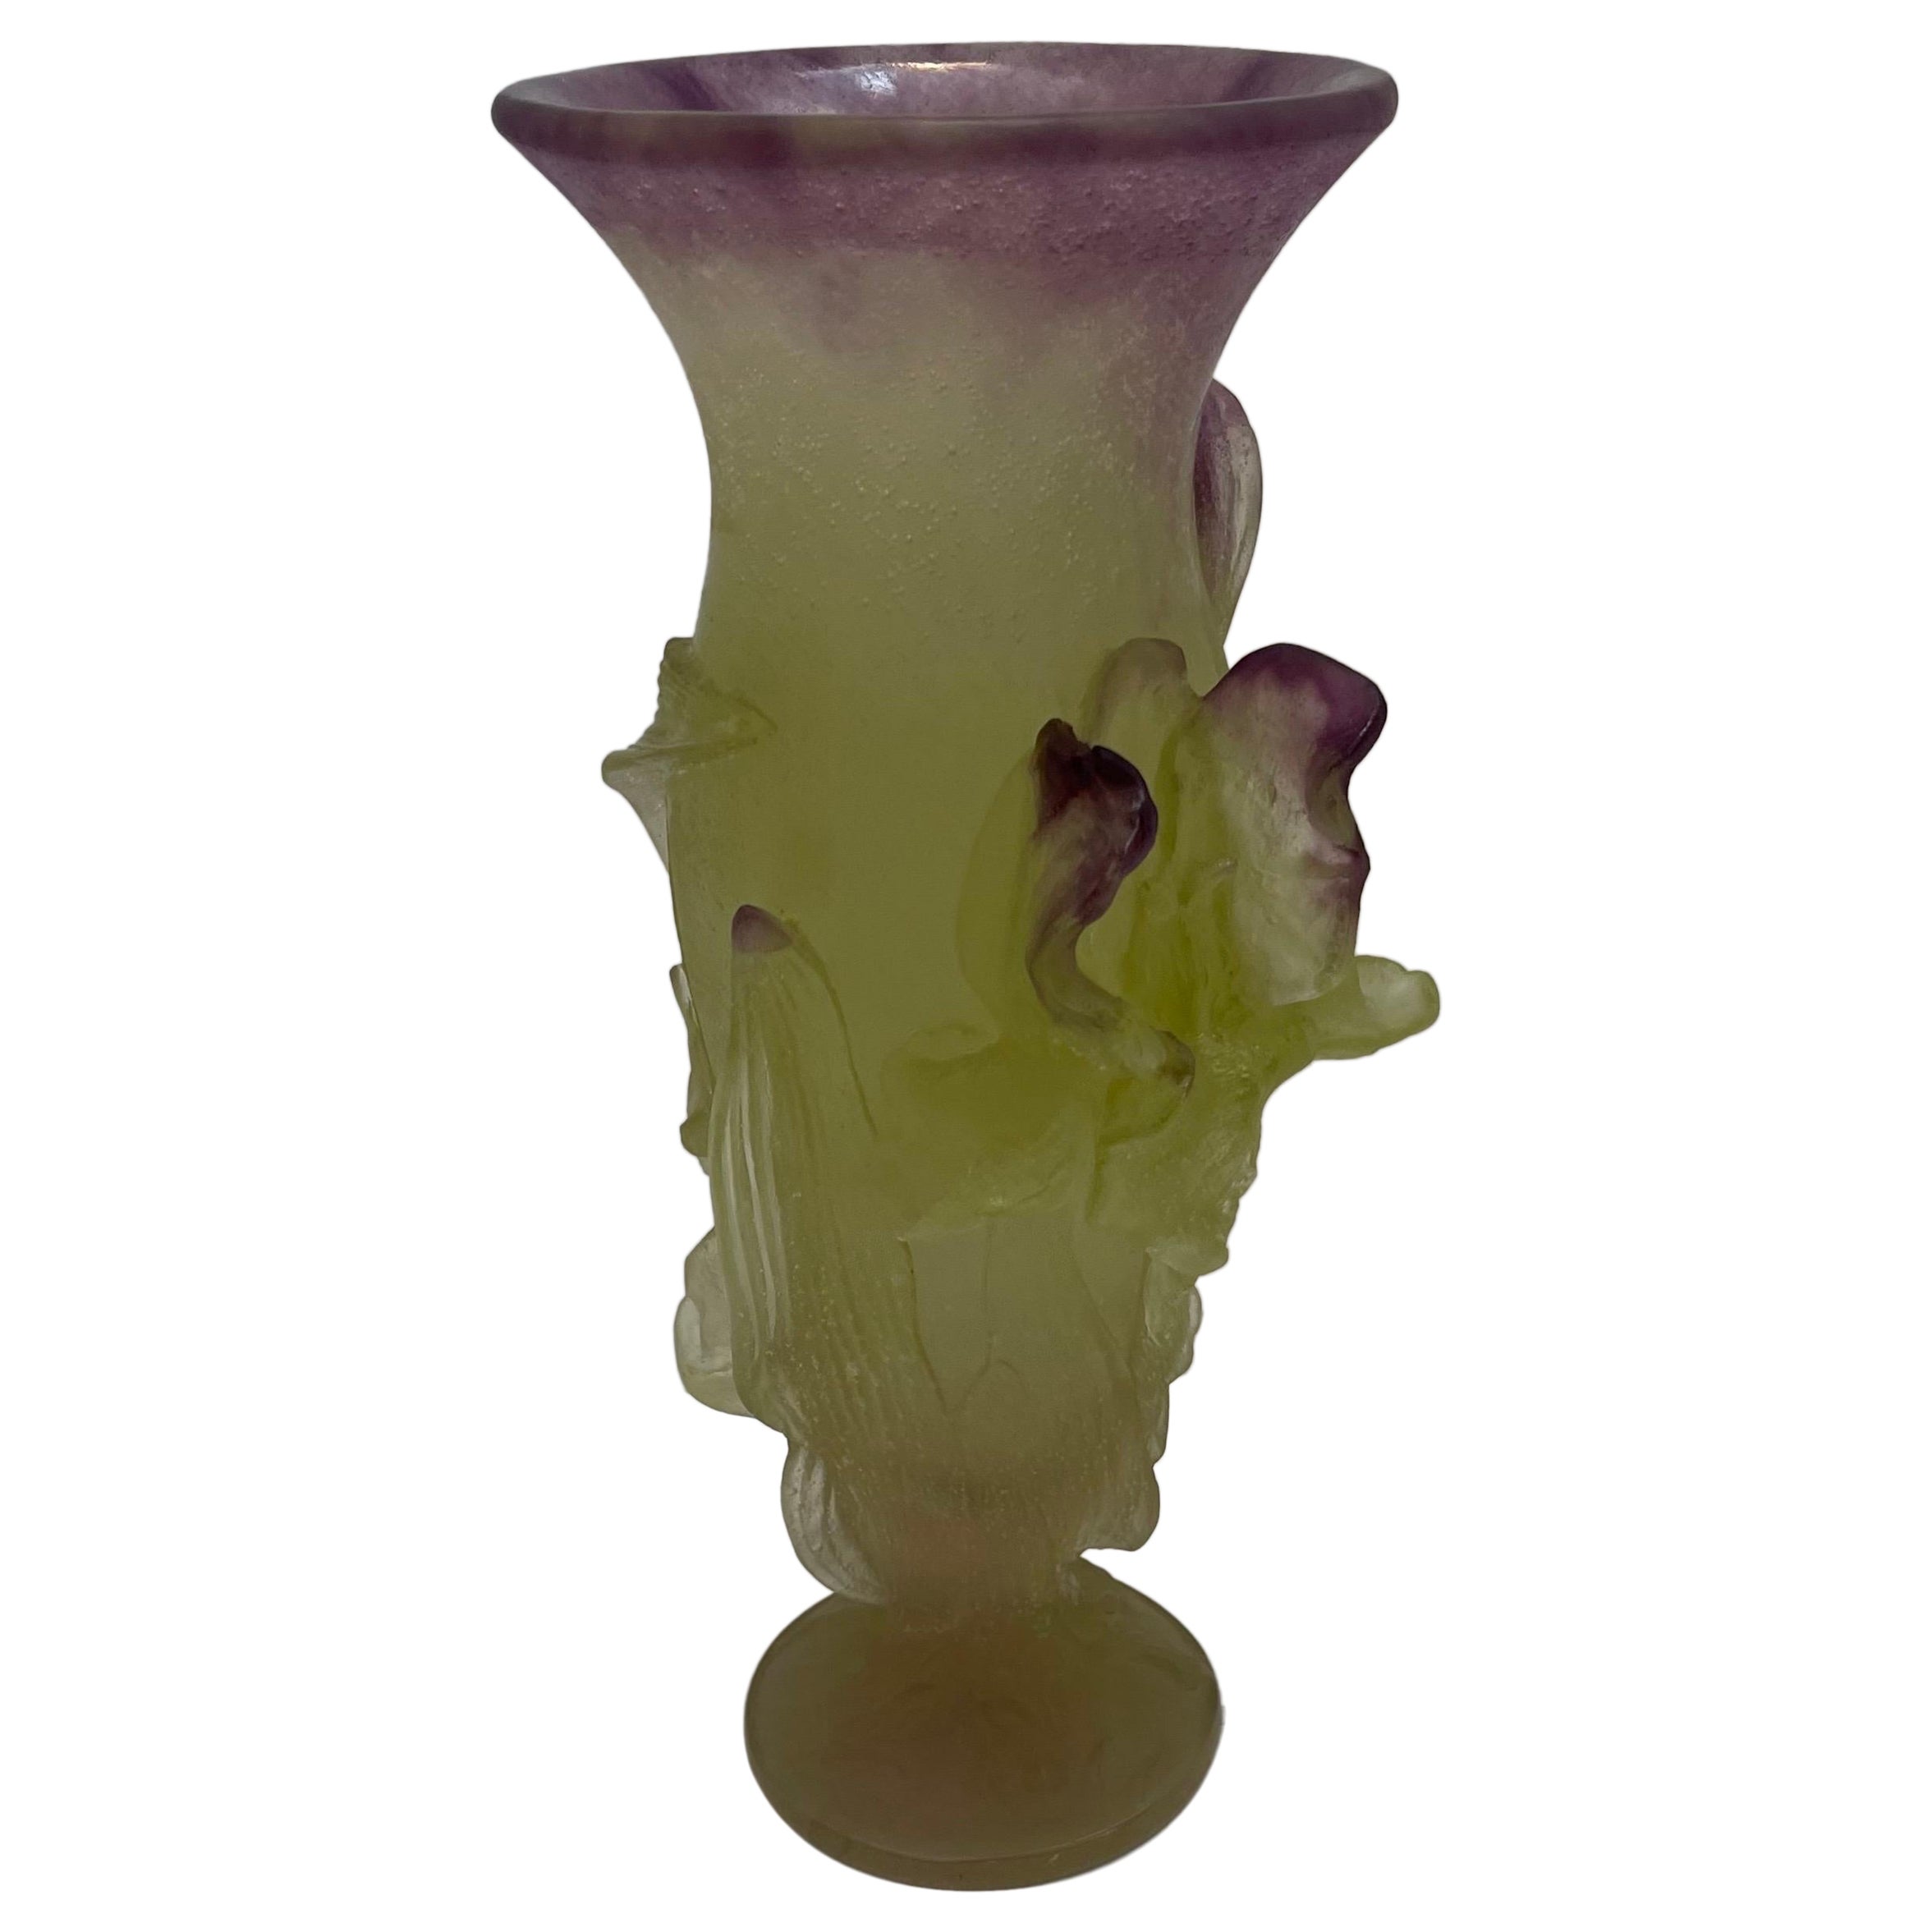  Wonderful Daum France Crystal "Pate De Verre" Large Art Glass Iris Flower Vase For Sale